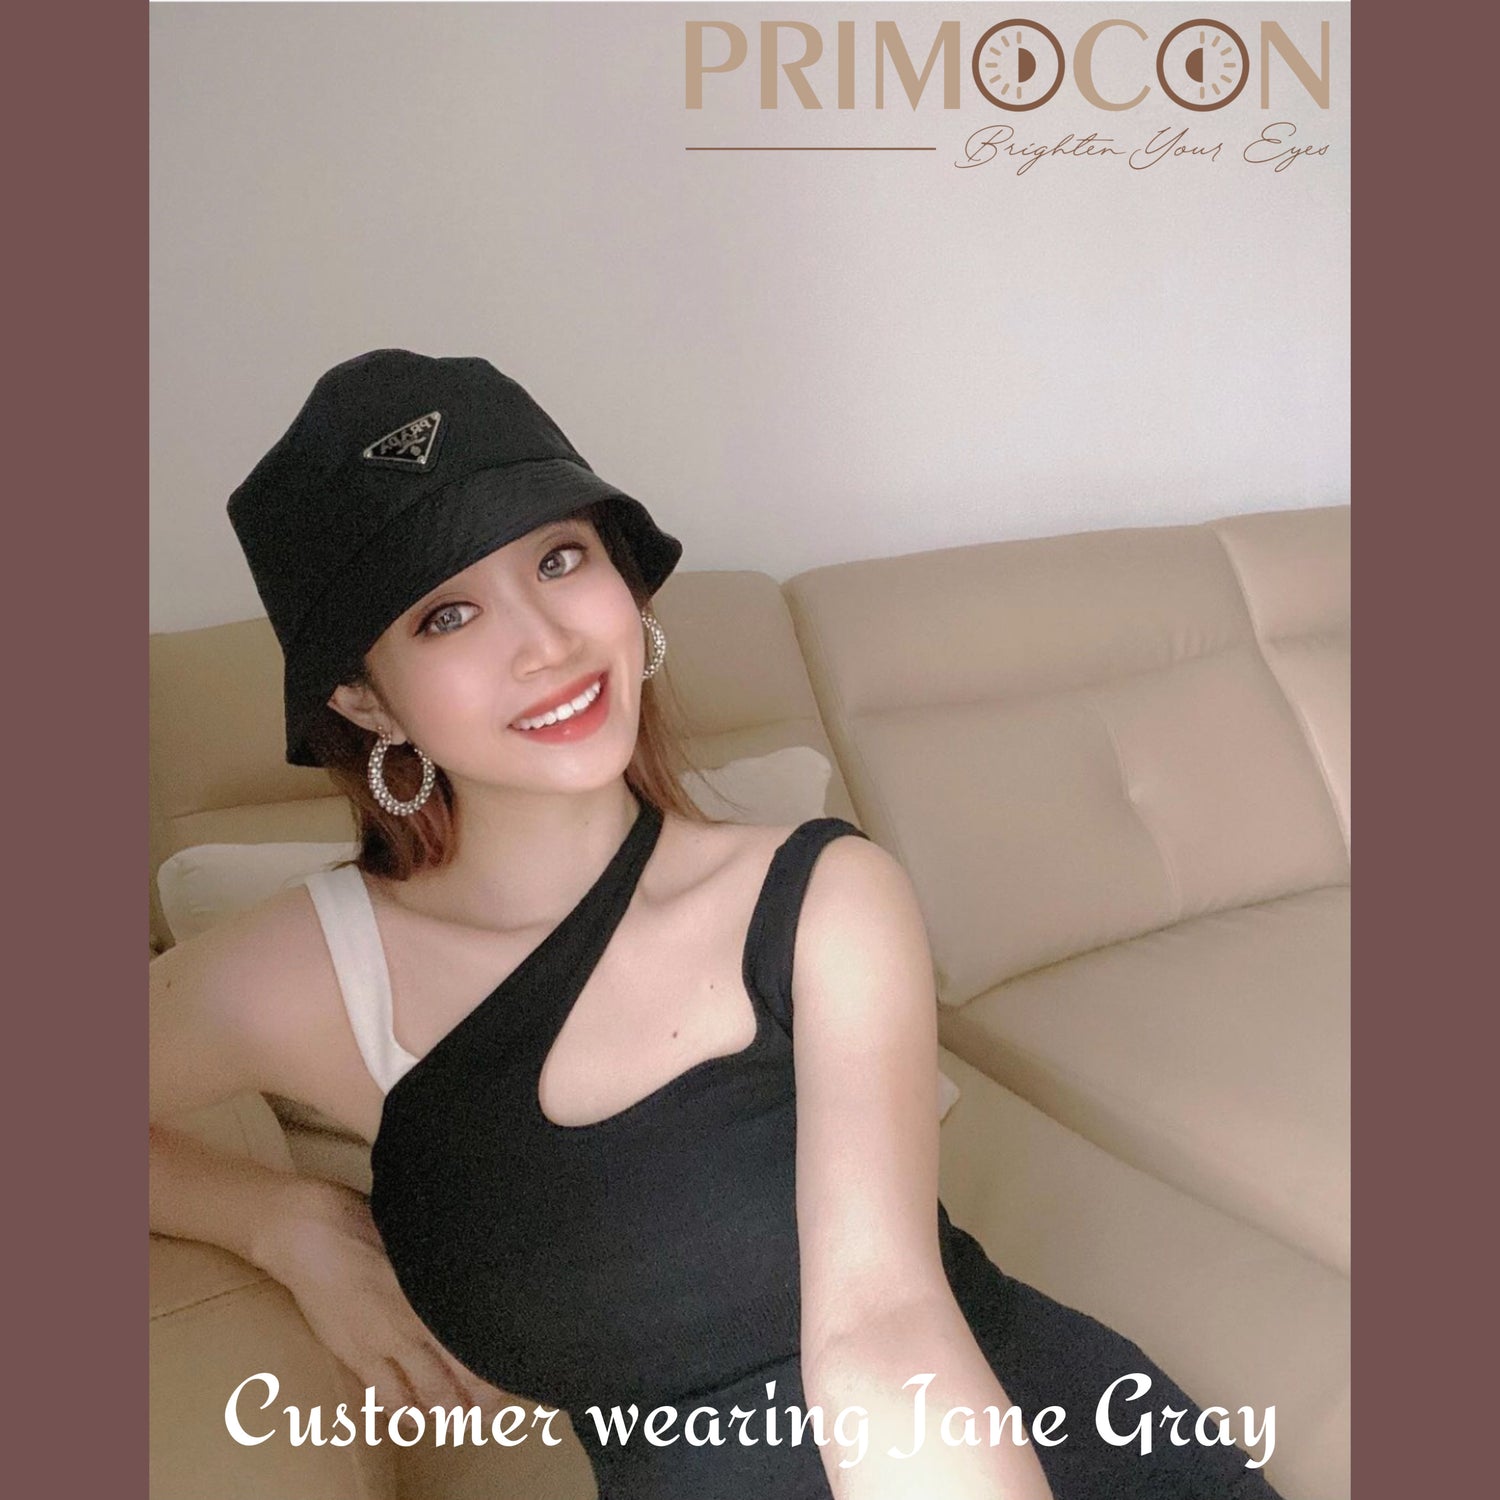 Jane Gray - Primocon